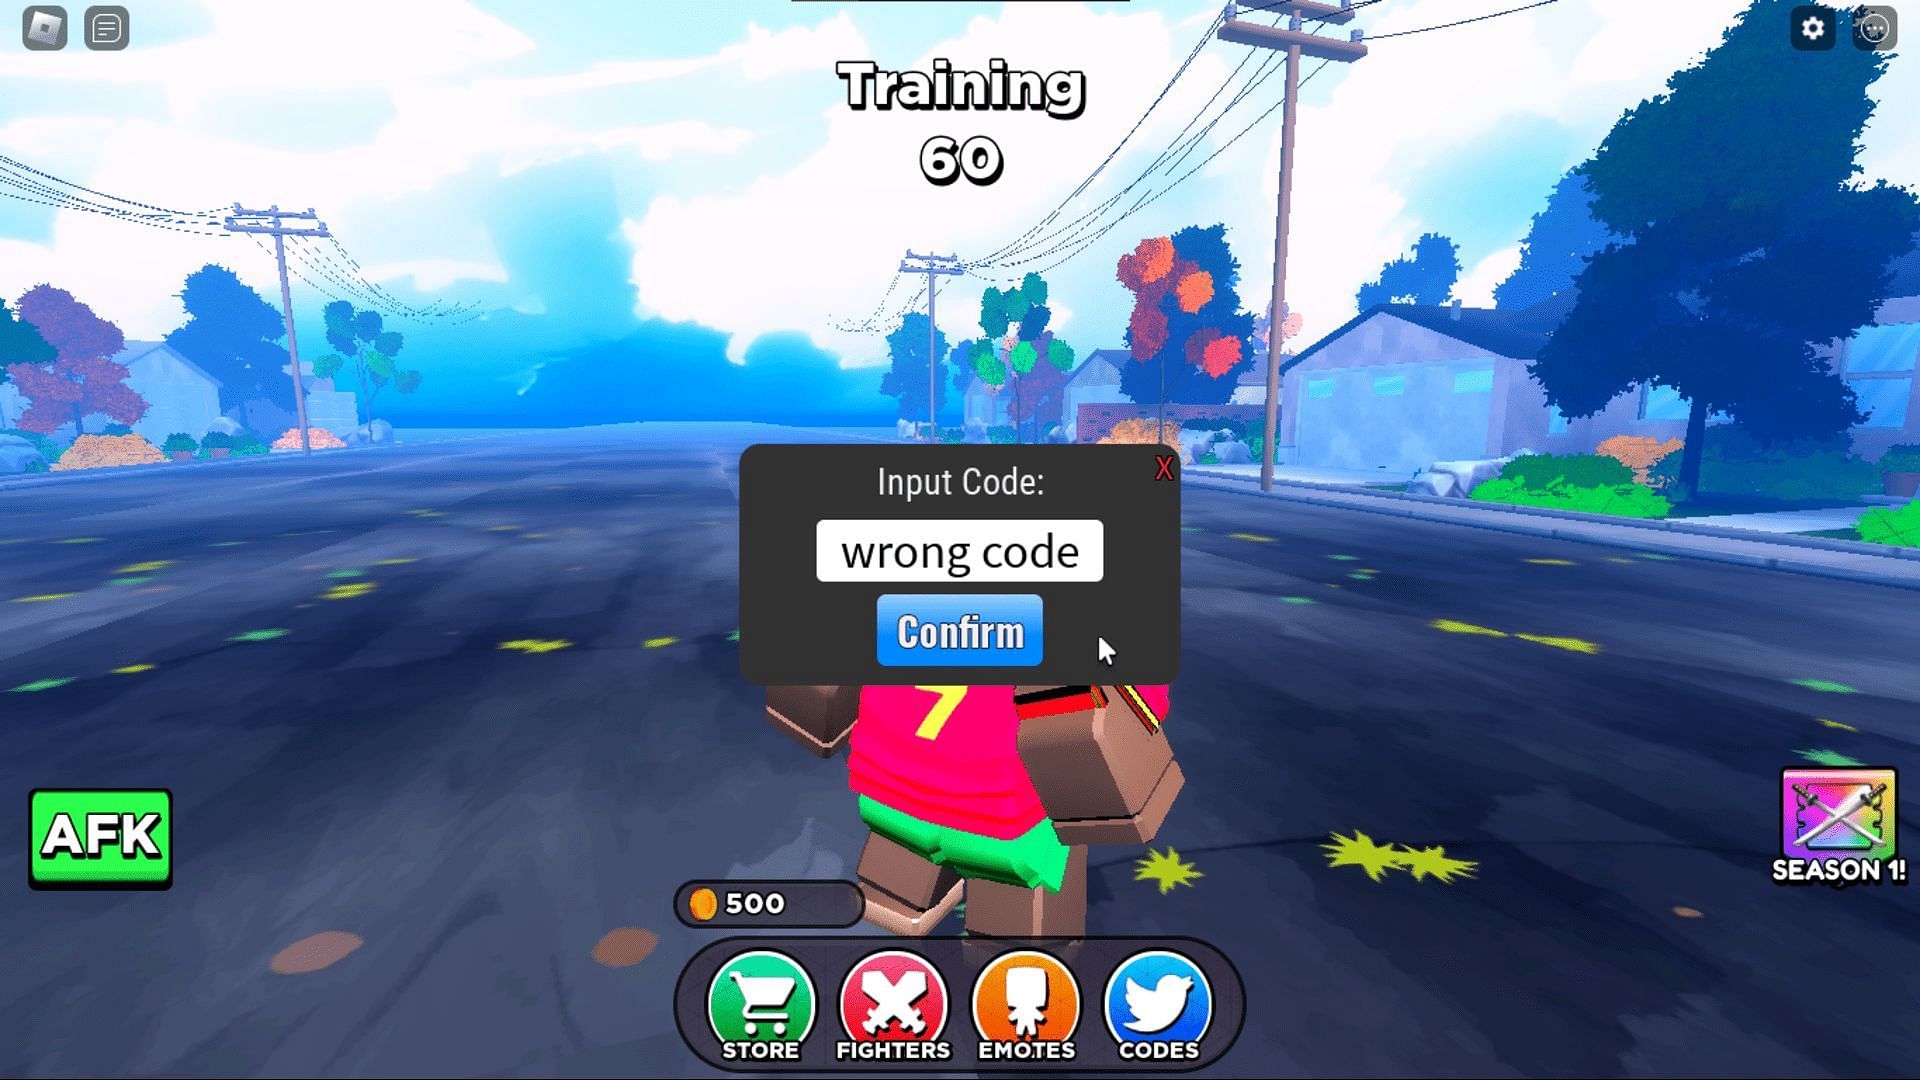 Wrong code in Goofy Arena (Image via Roblox)